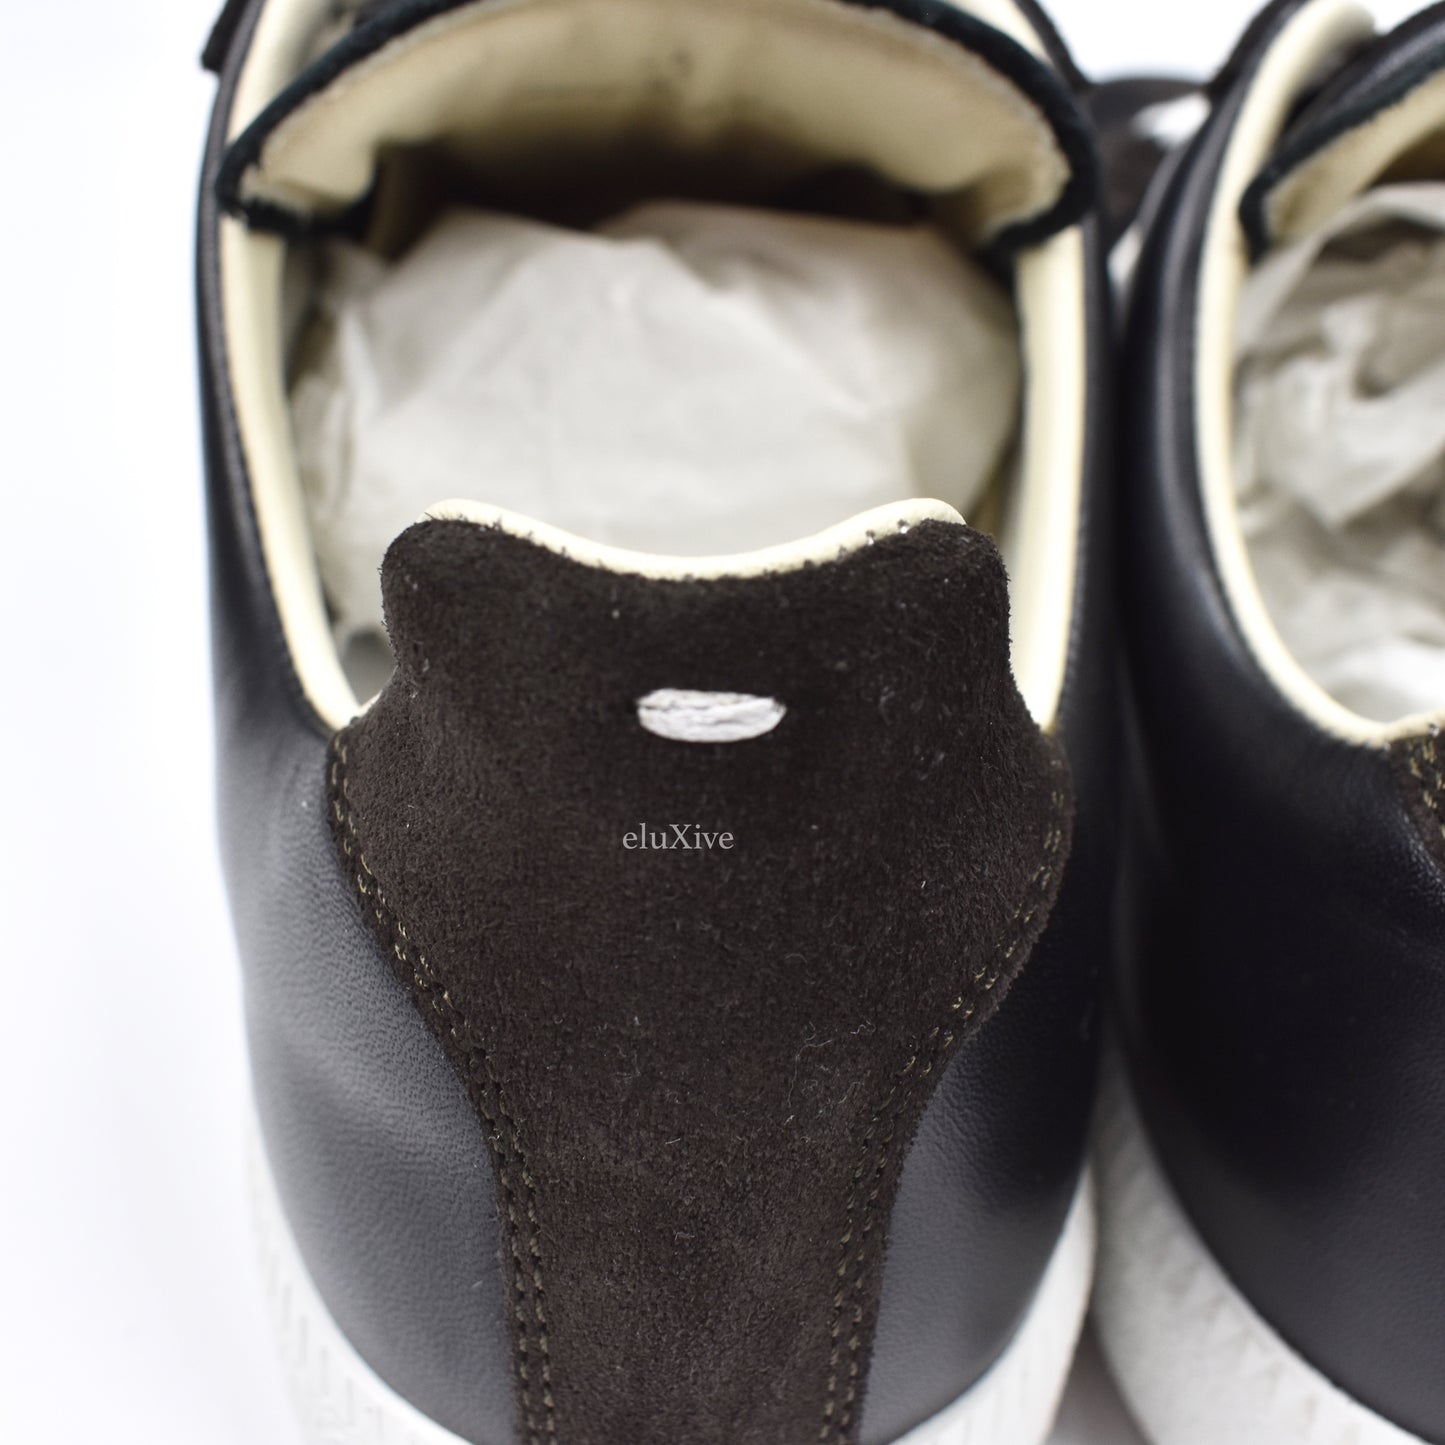 Maison Margiela - Black & White GAT Sneakers